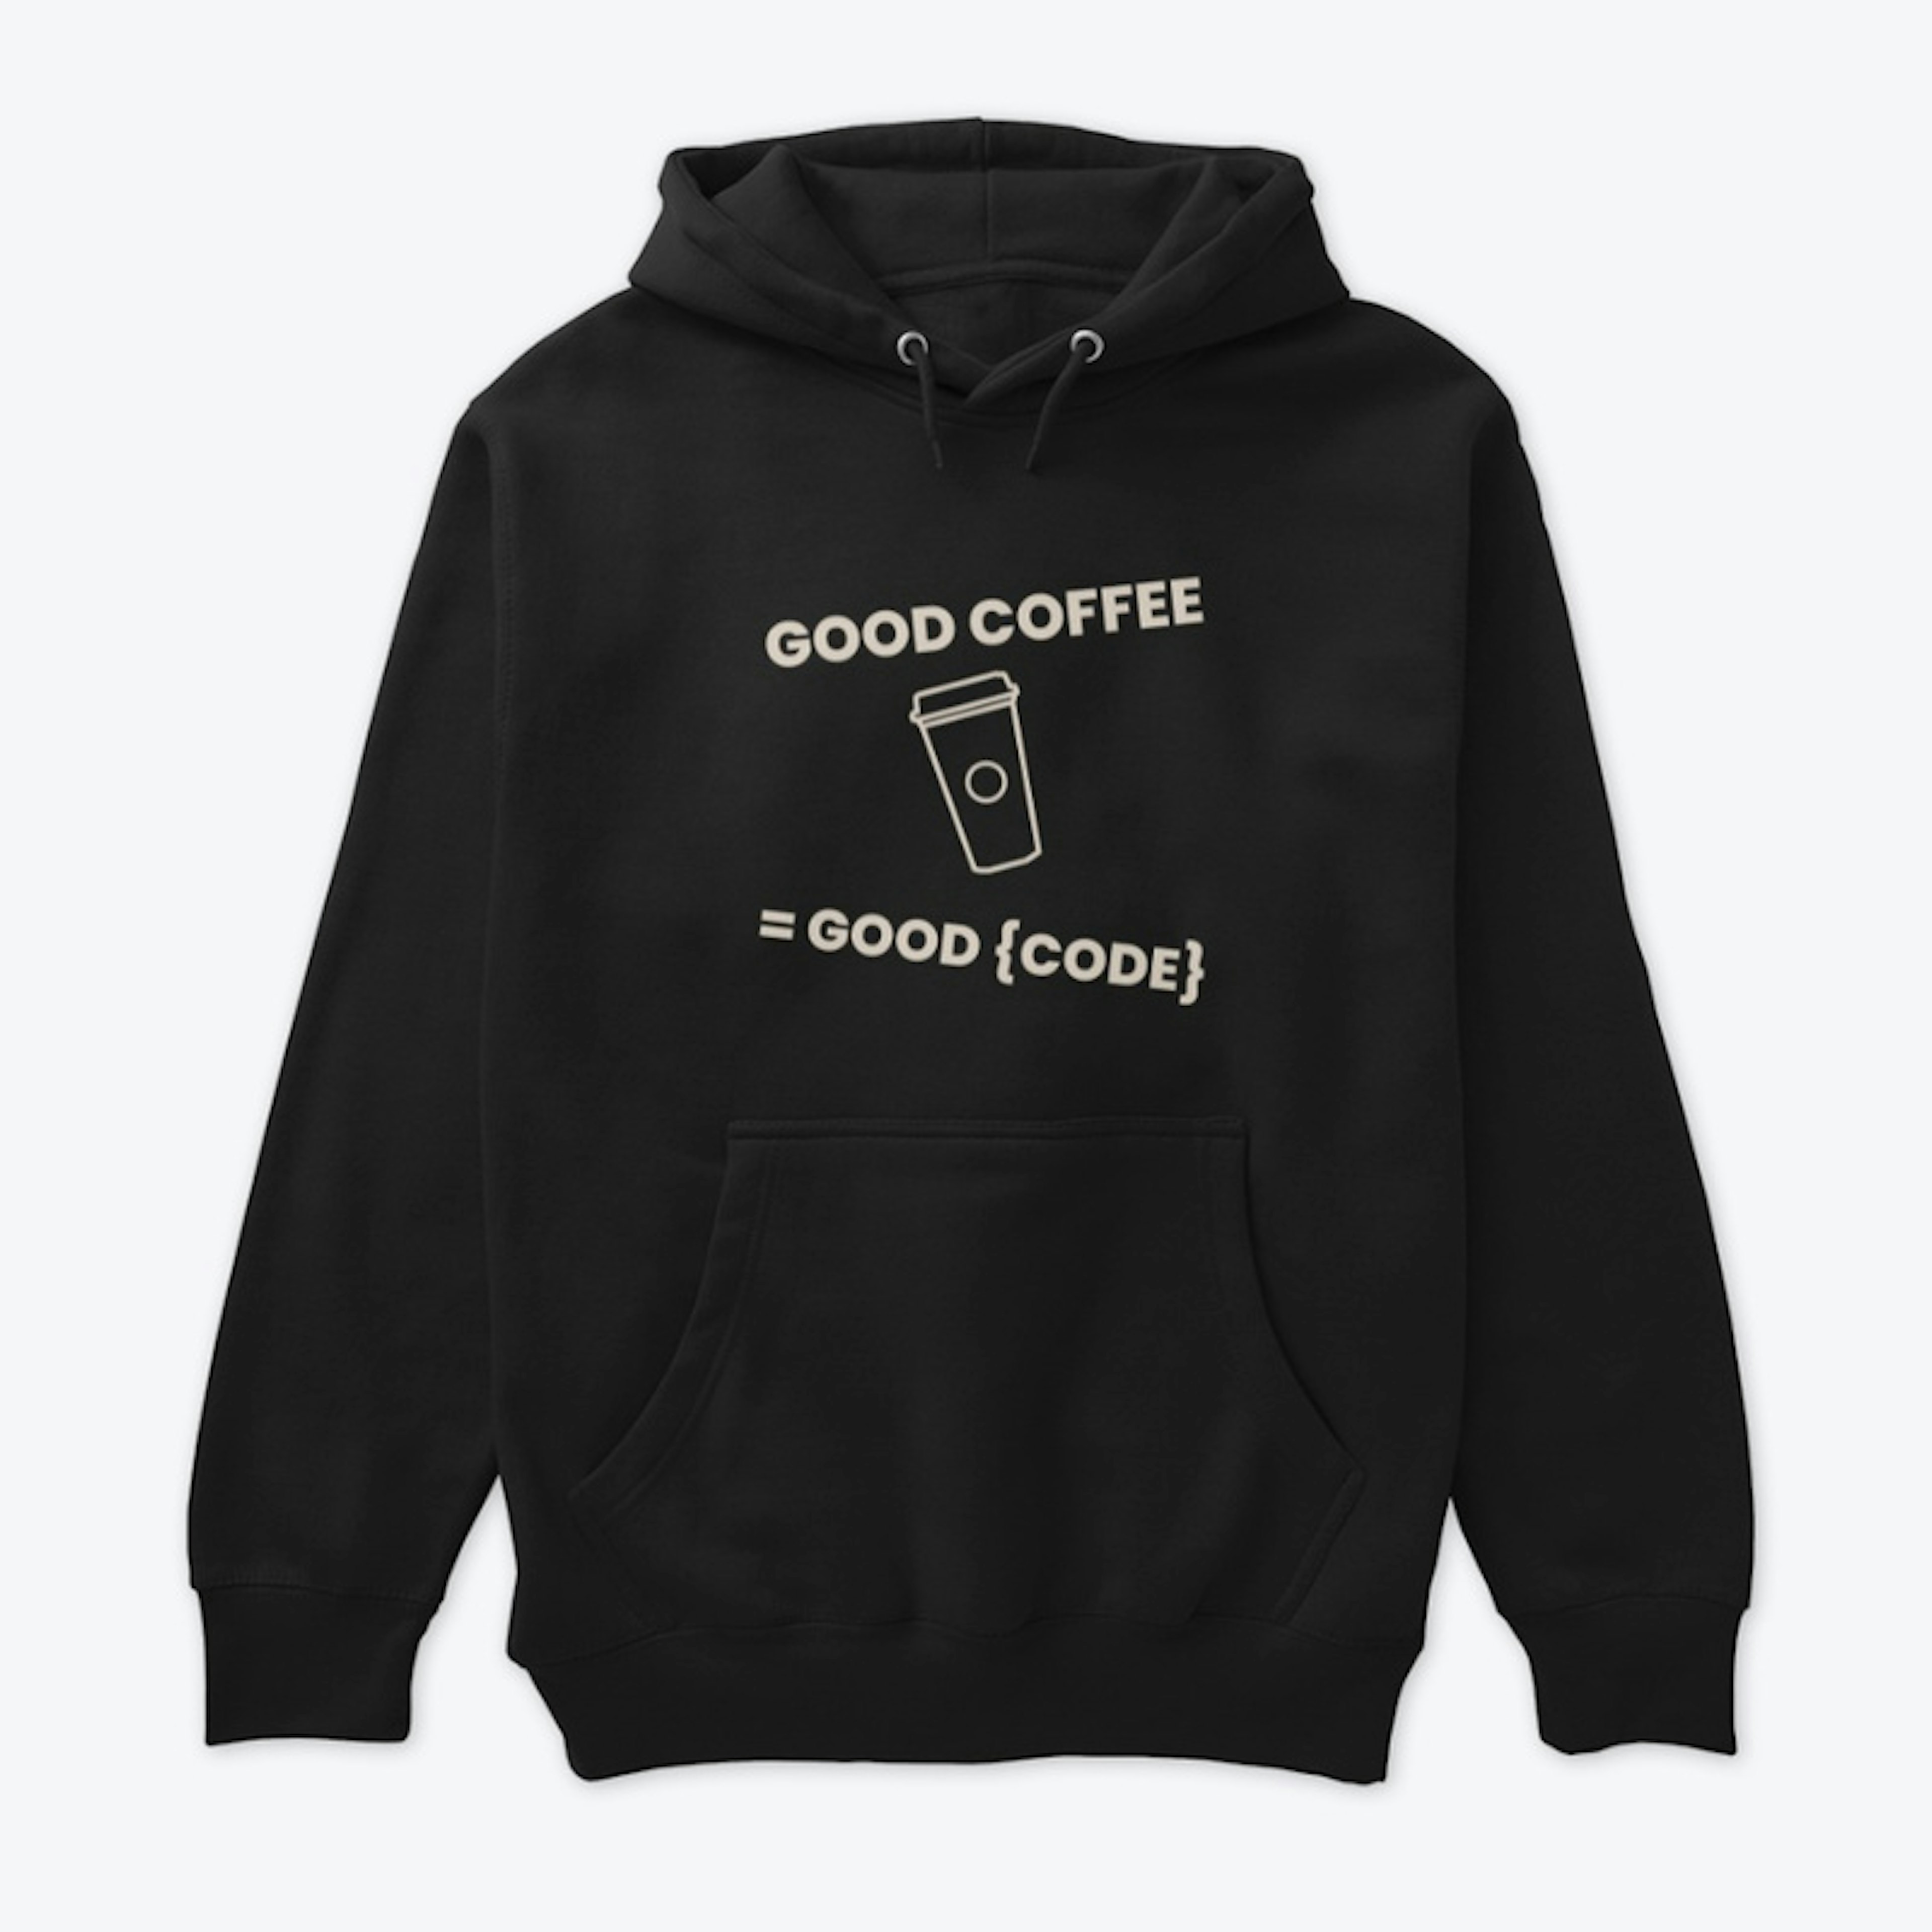 Good coffee good code